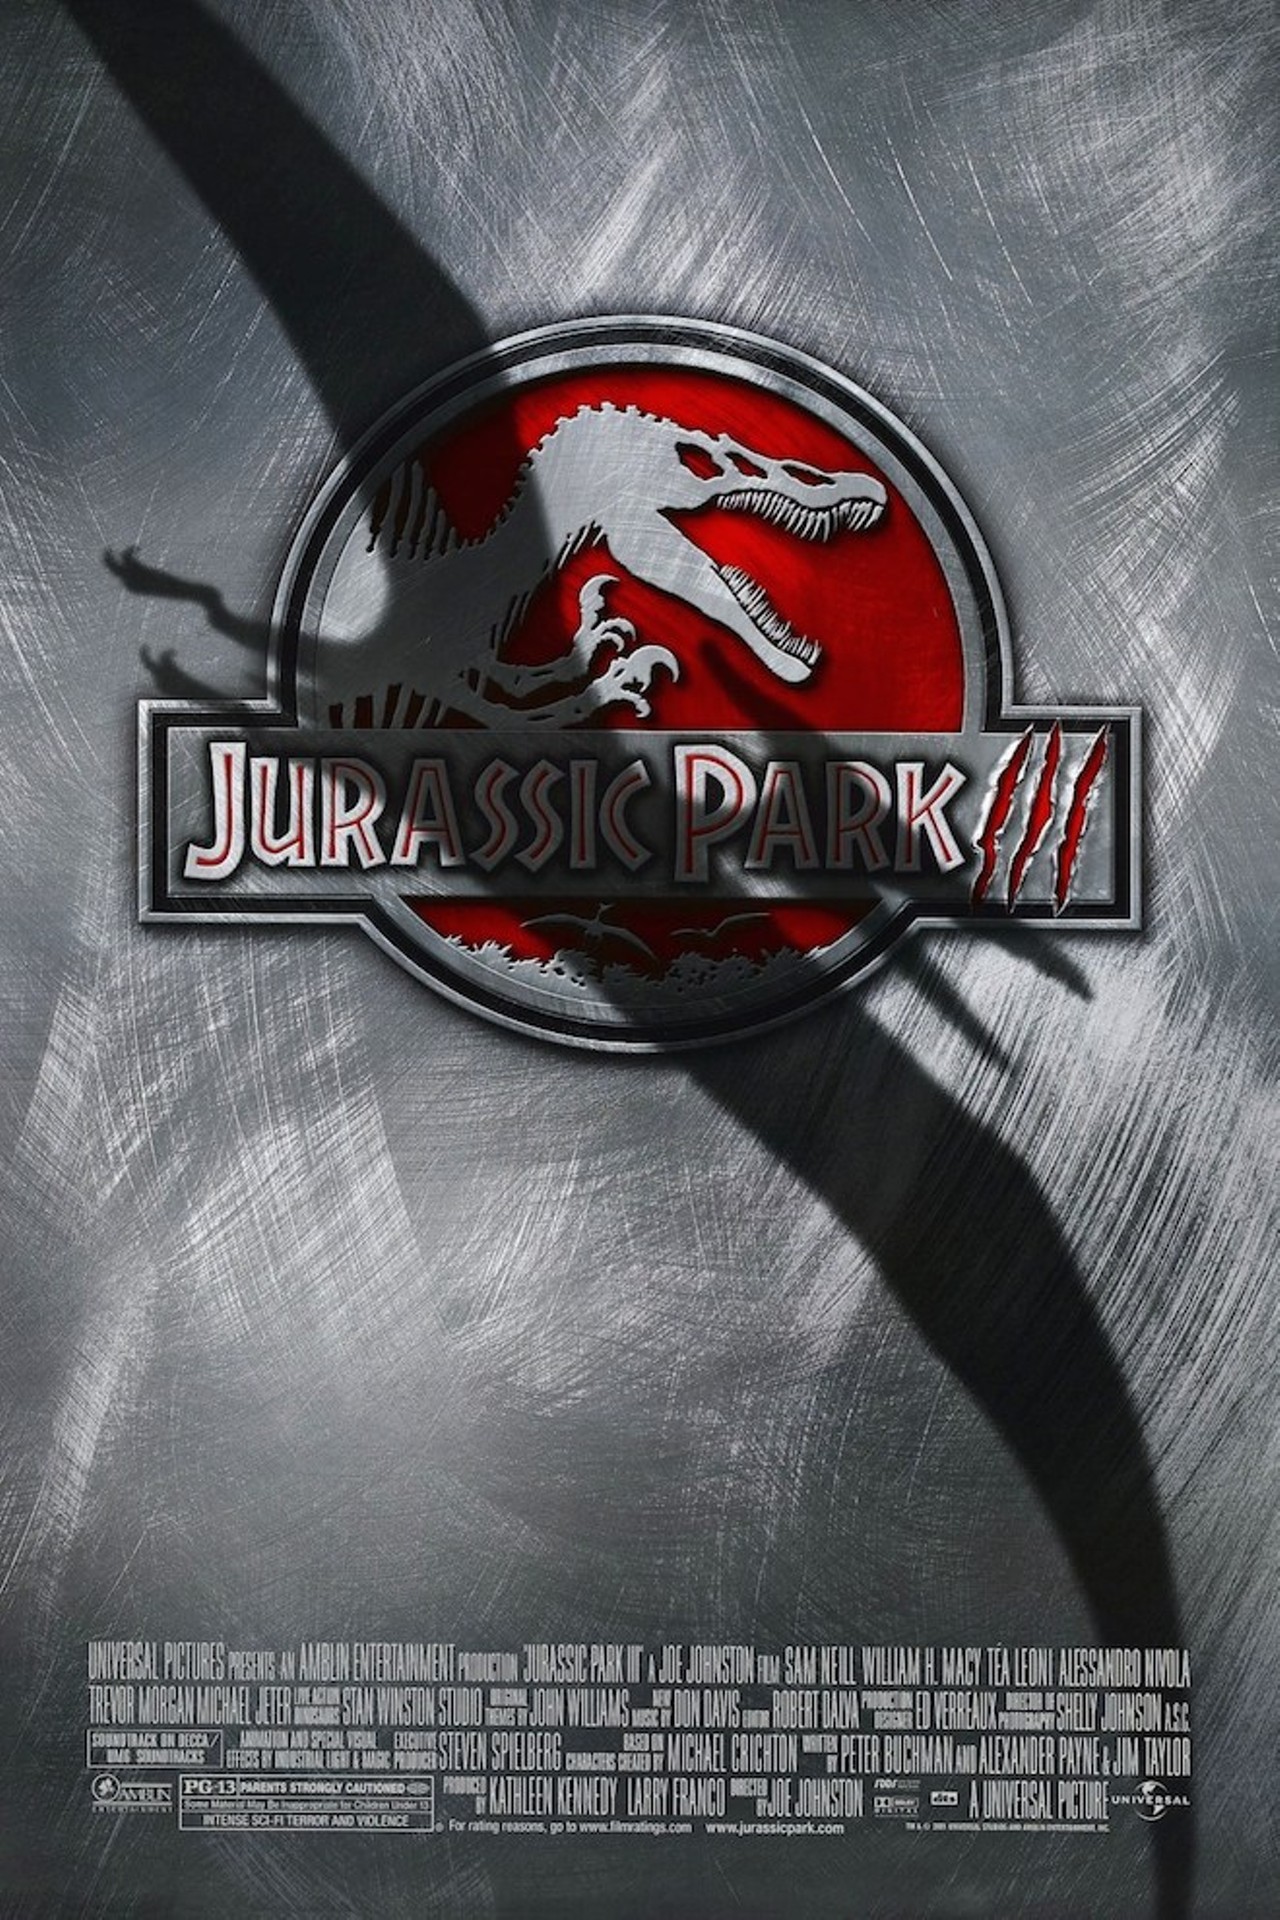 Jurassic Park IIIvia